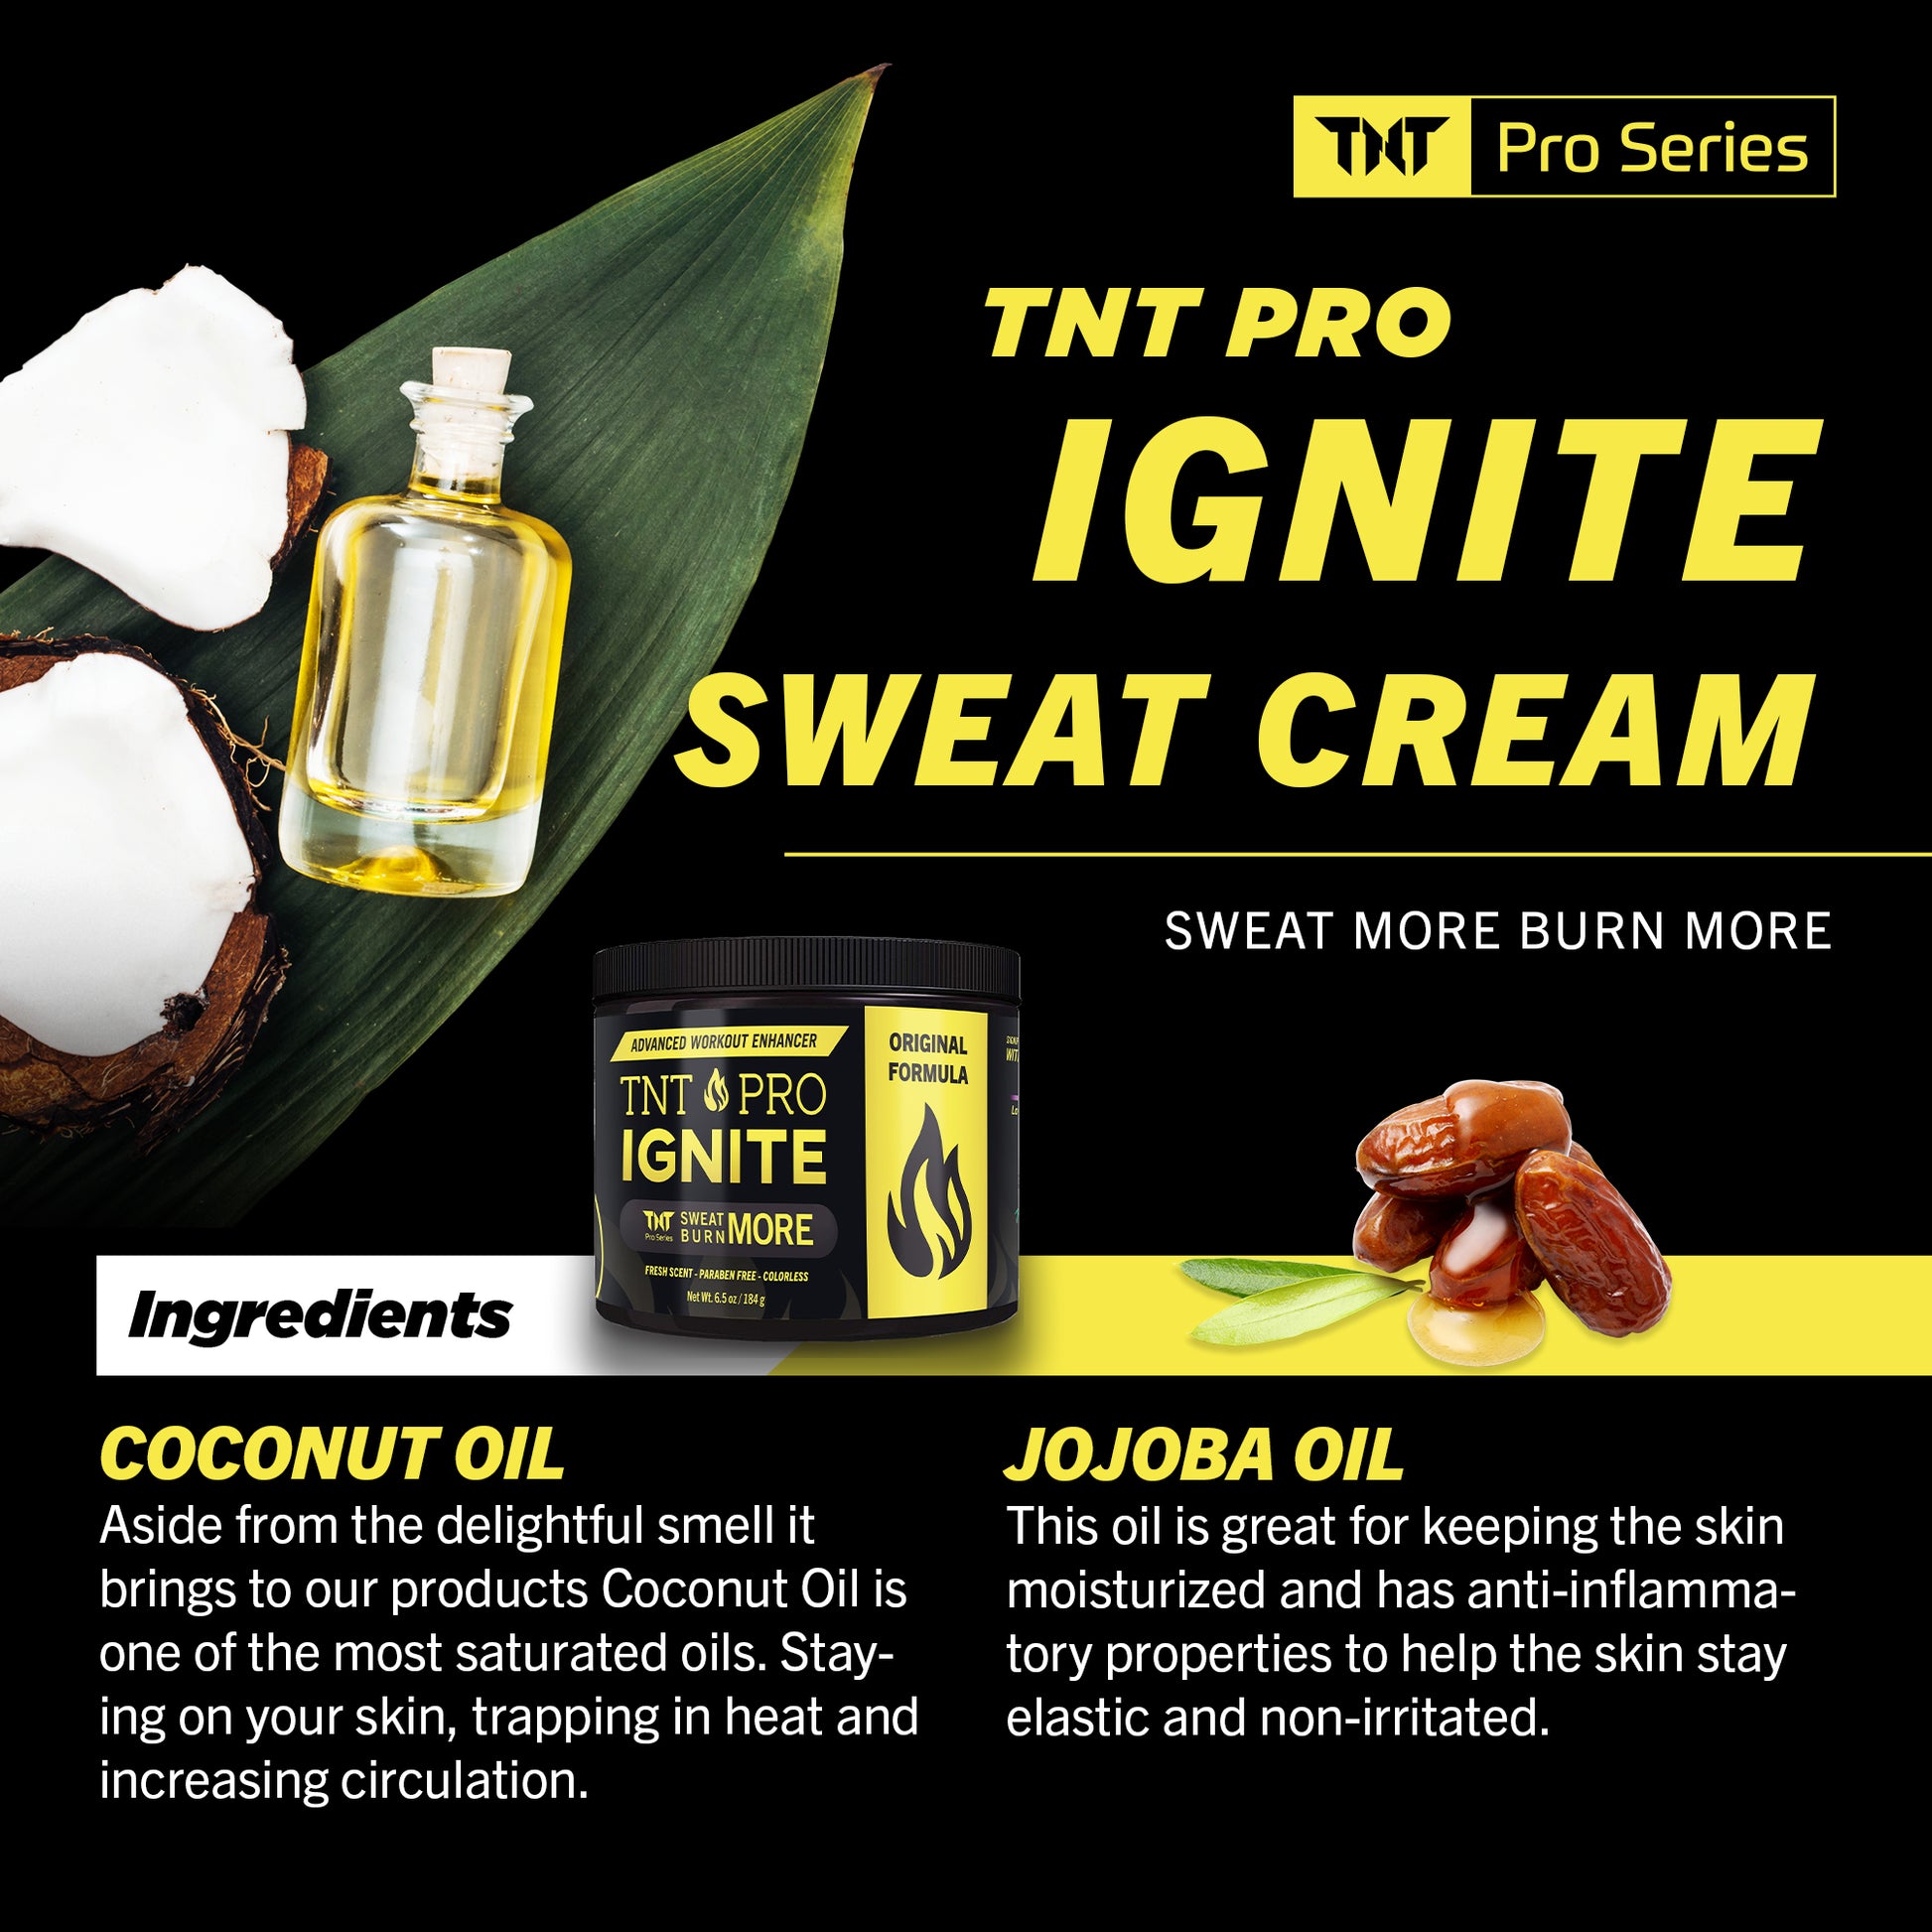 TNT Pro Ignite Sweat Cream - Original - TNT Pro Series